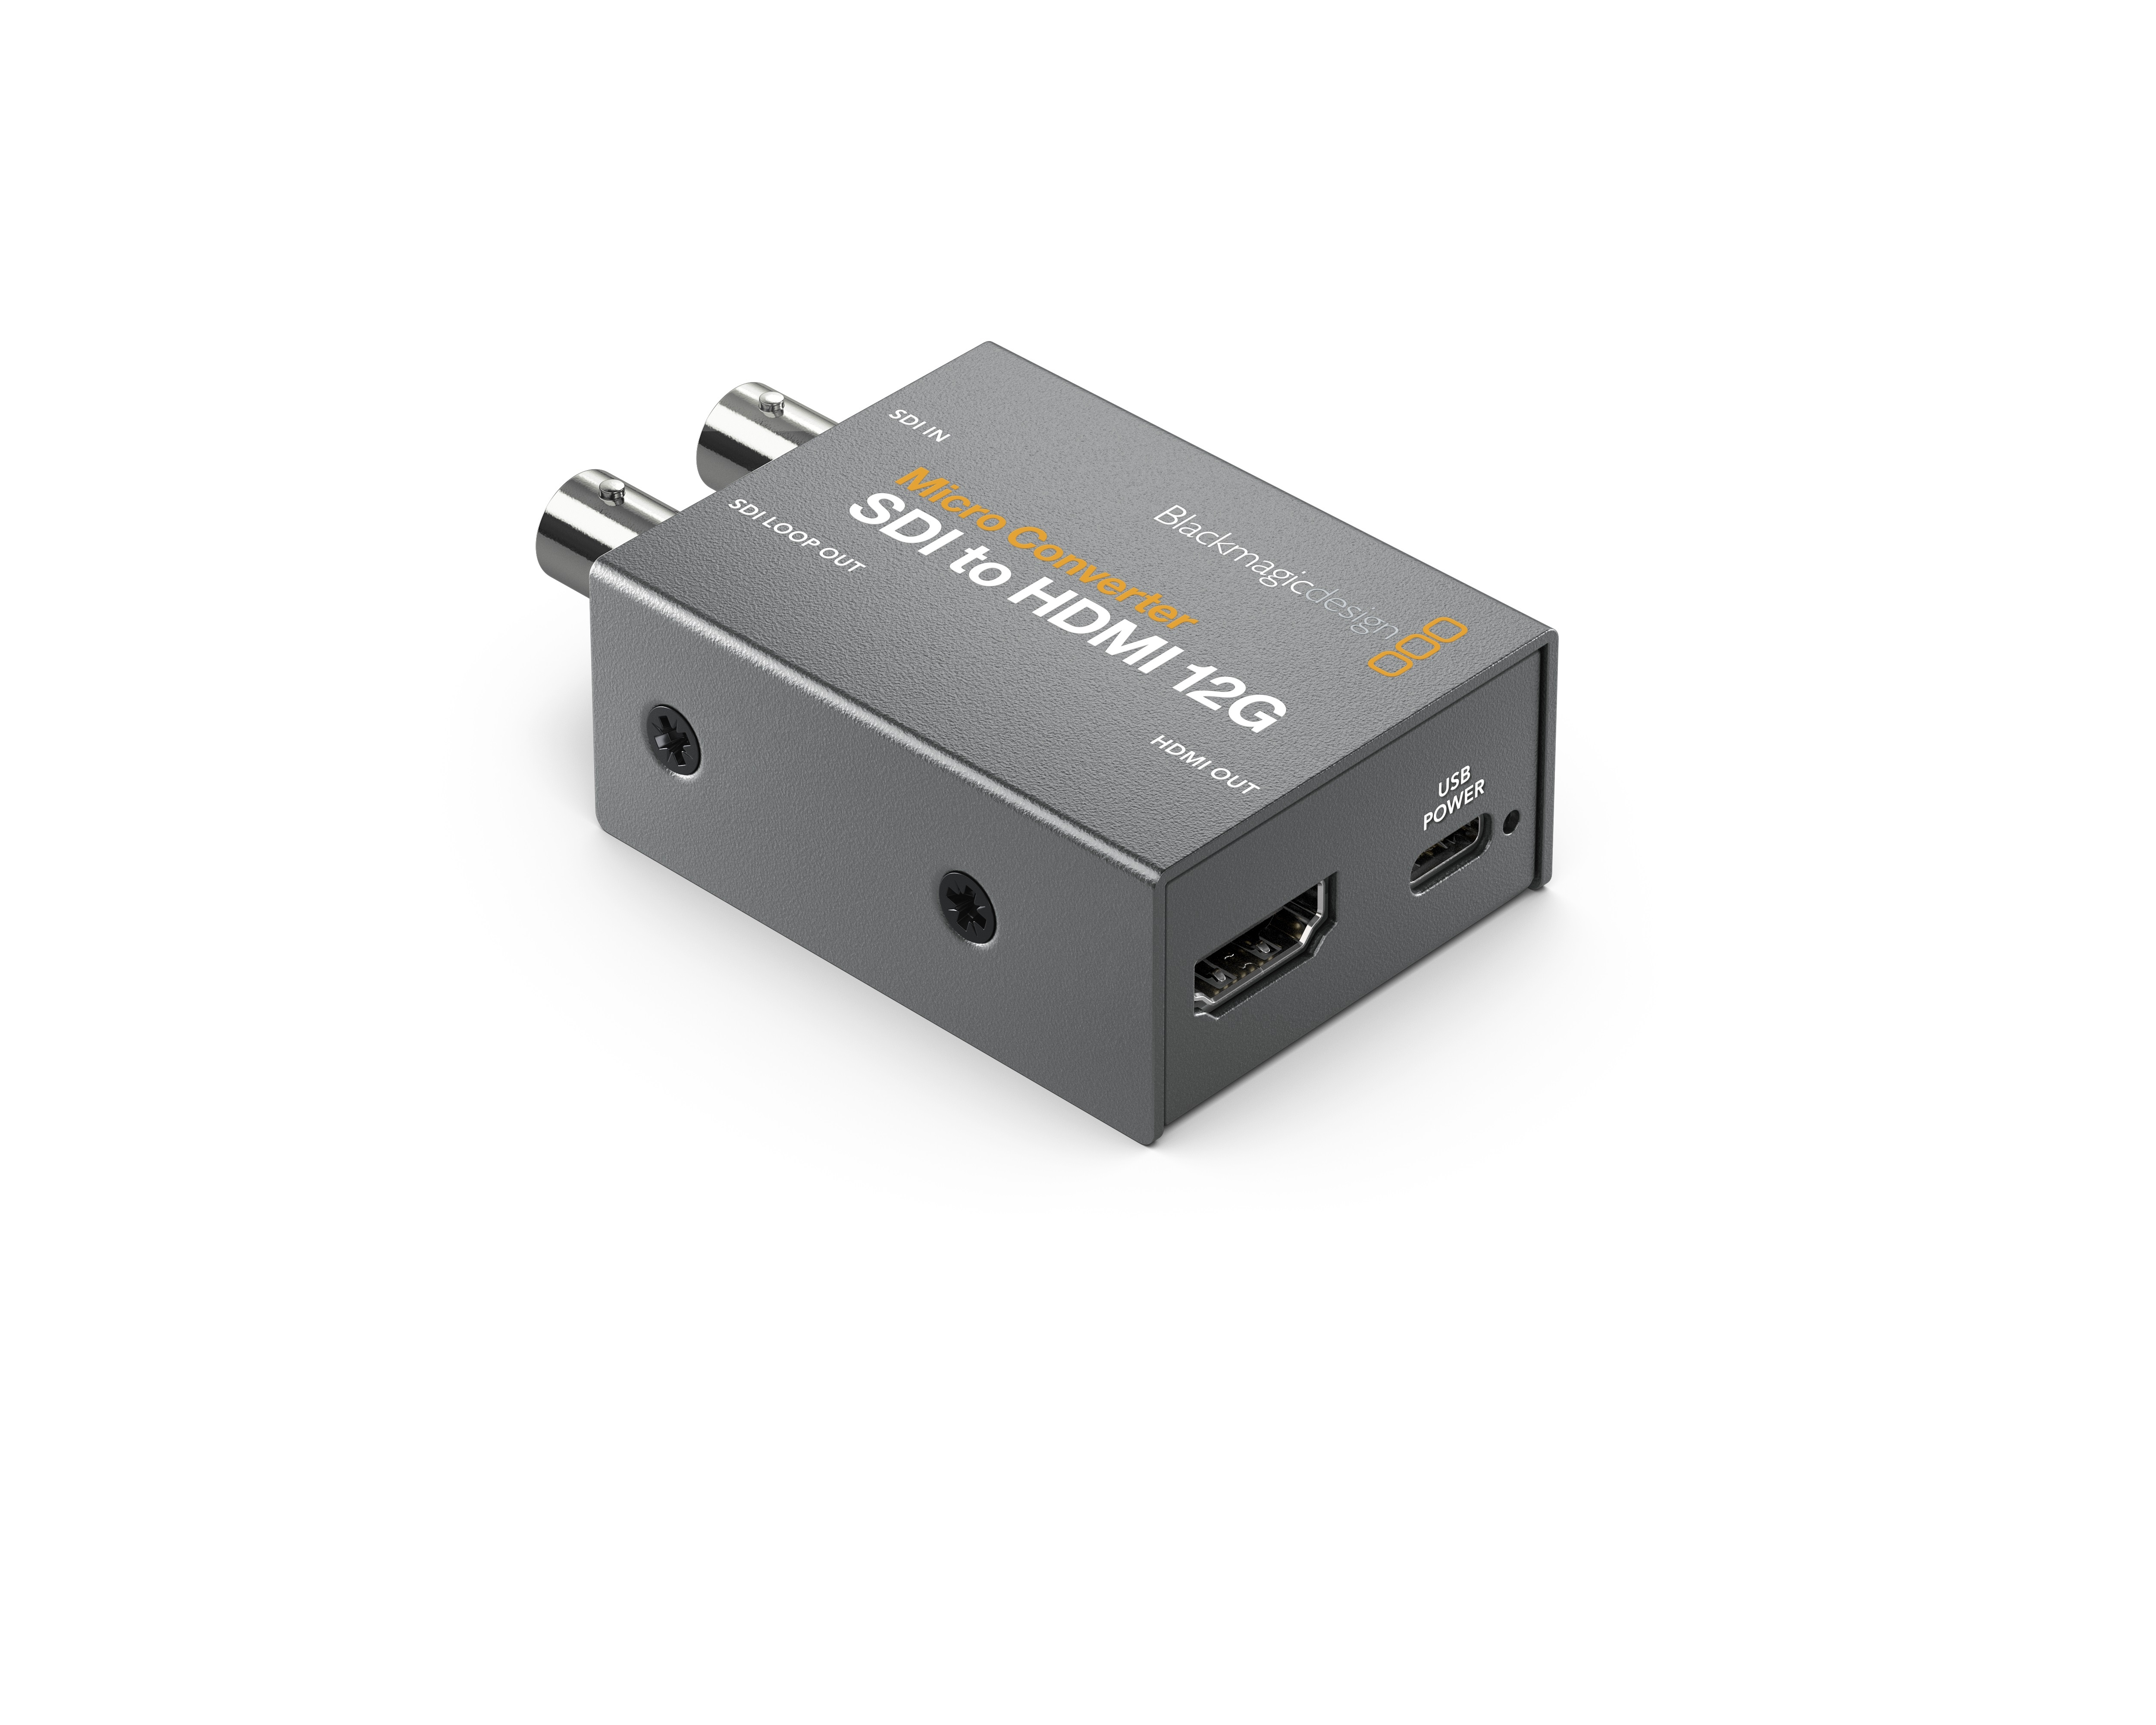 Blackmagic Micro Converter SDI to HDMI 12G with Power Supply